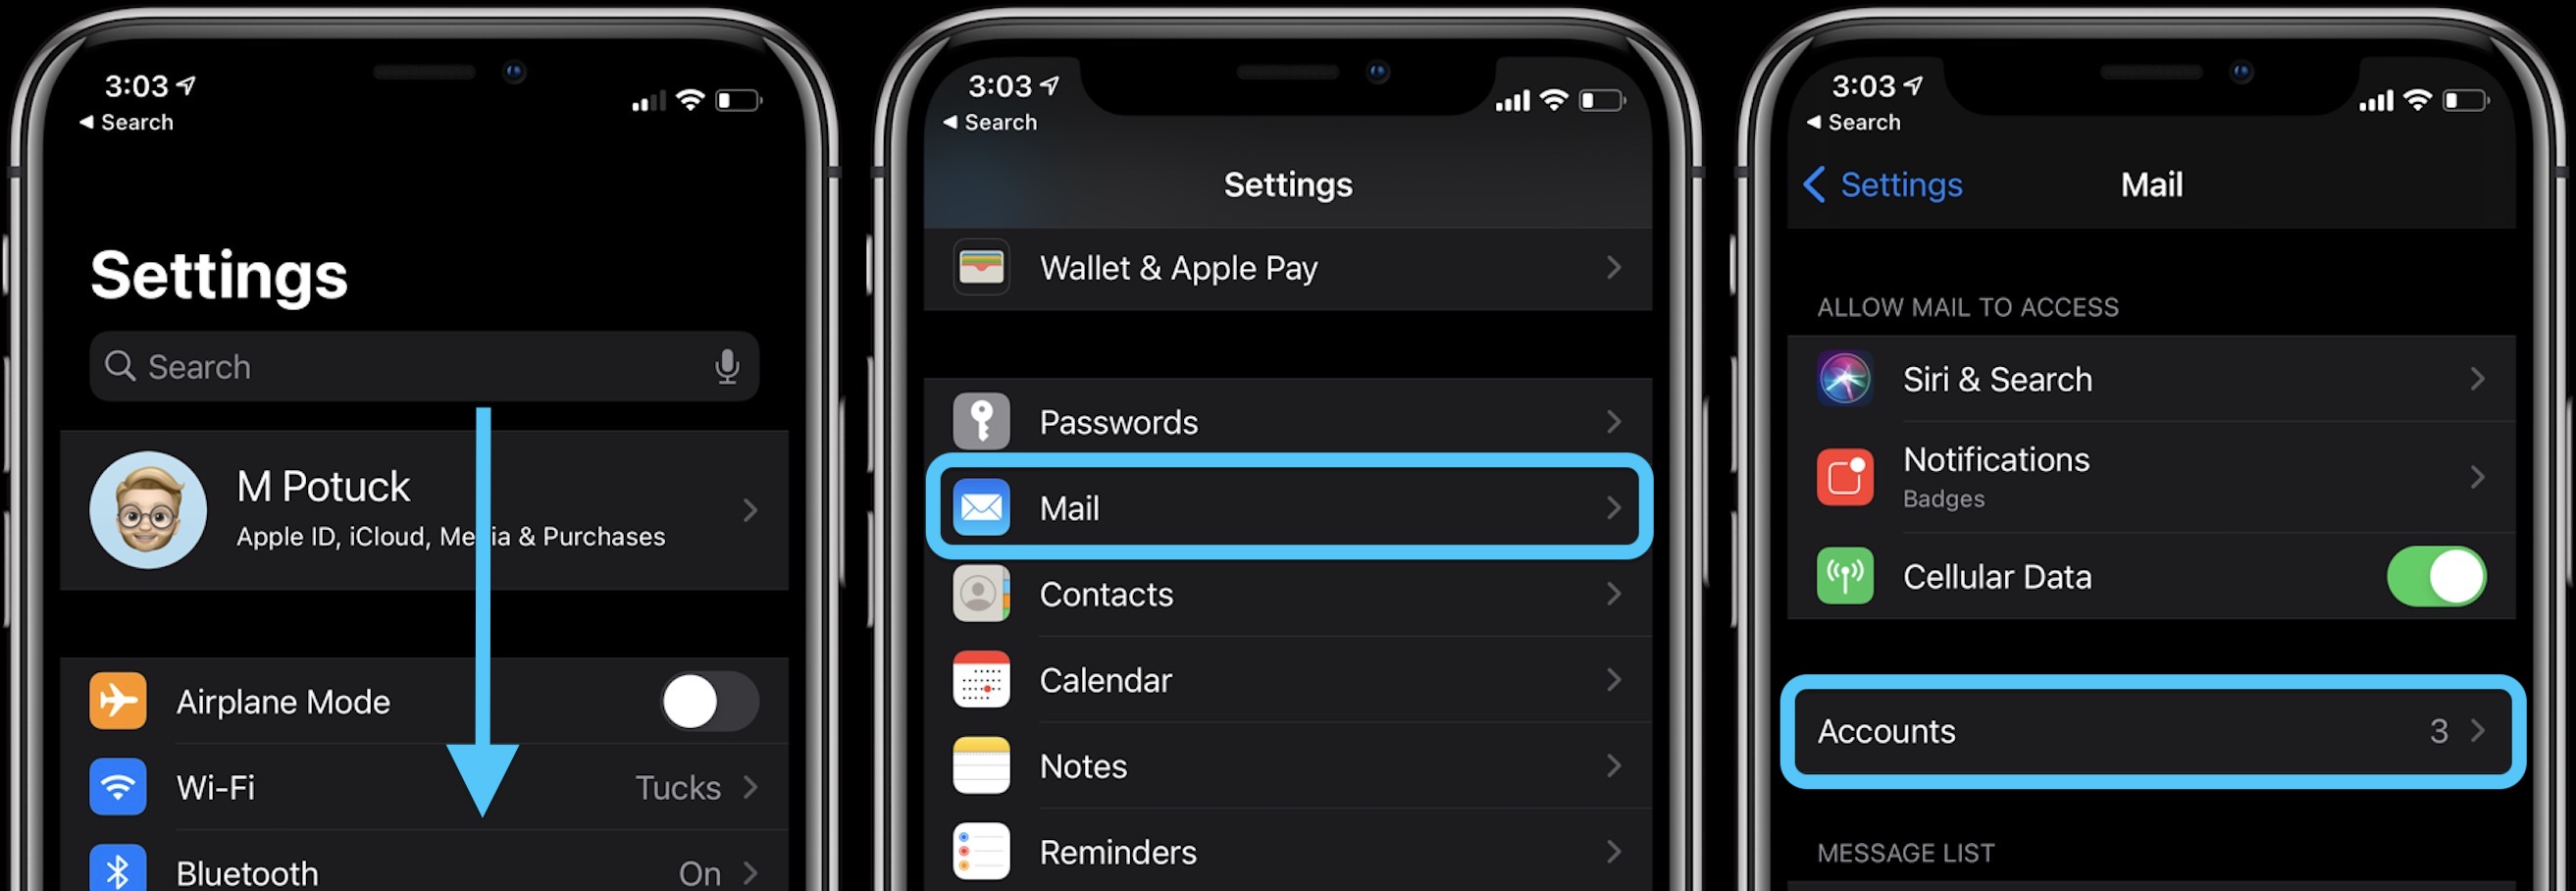 How to add edit iPhone accounts in iOS 14 walkthrough